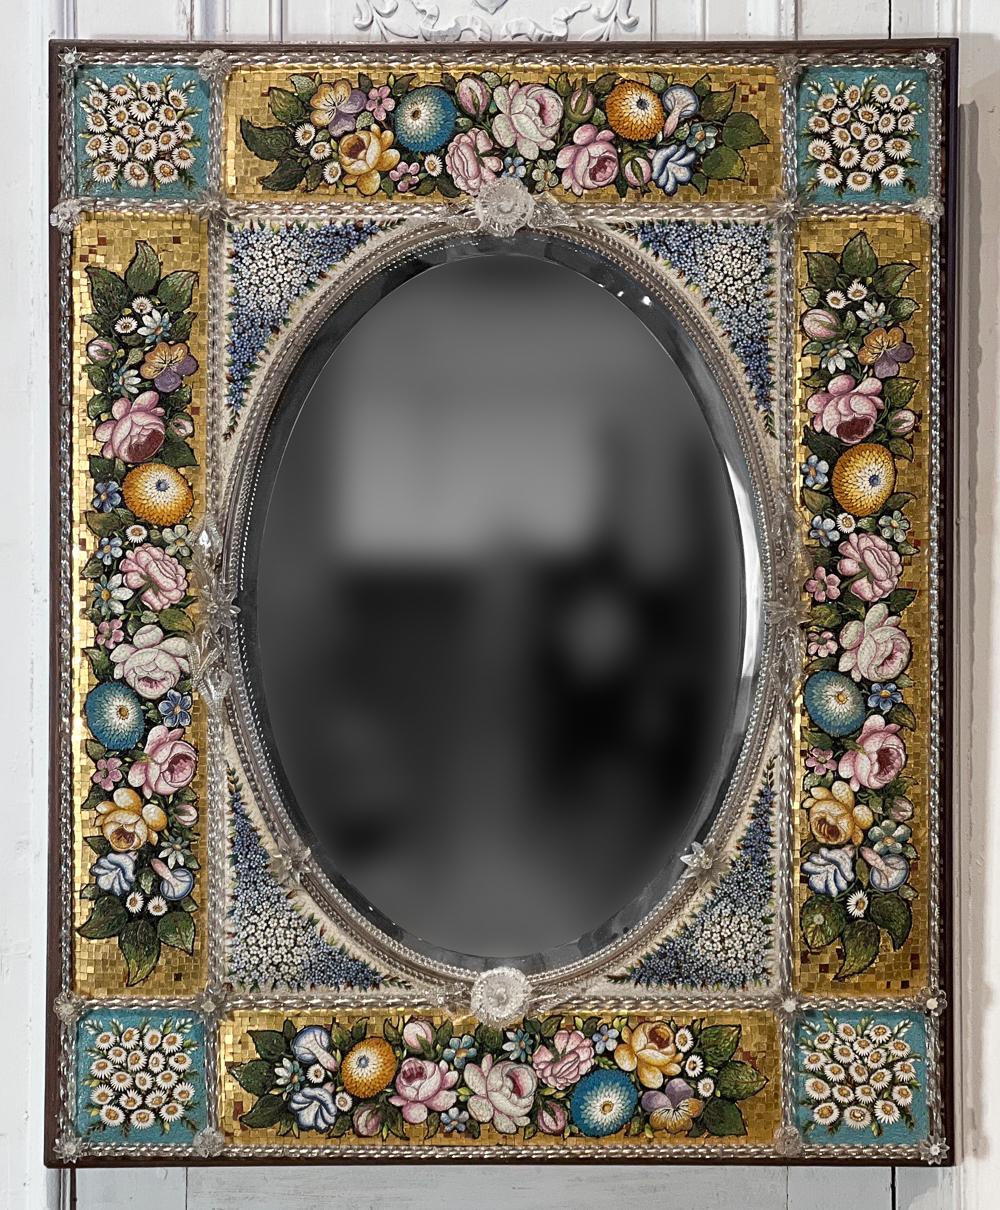  Italian millefiori micro mosaic Venetian mirror, recently restored, est. $100-$25,000